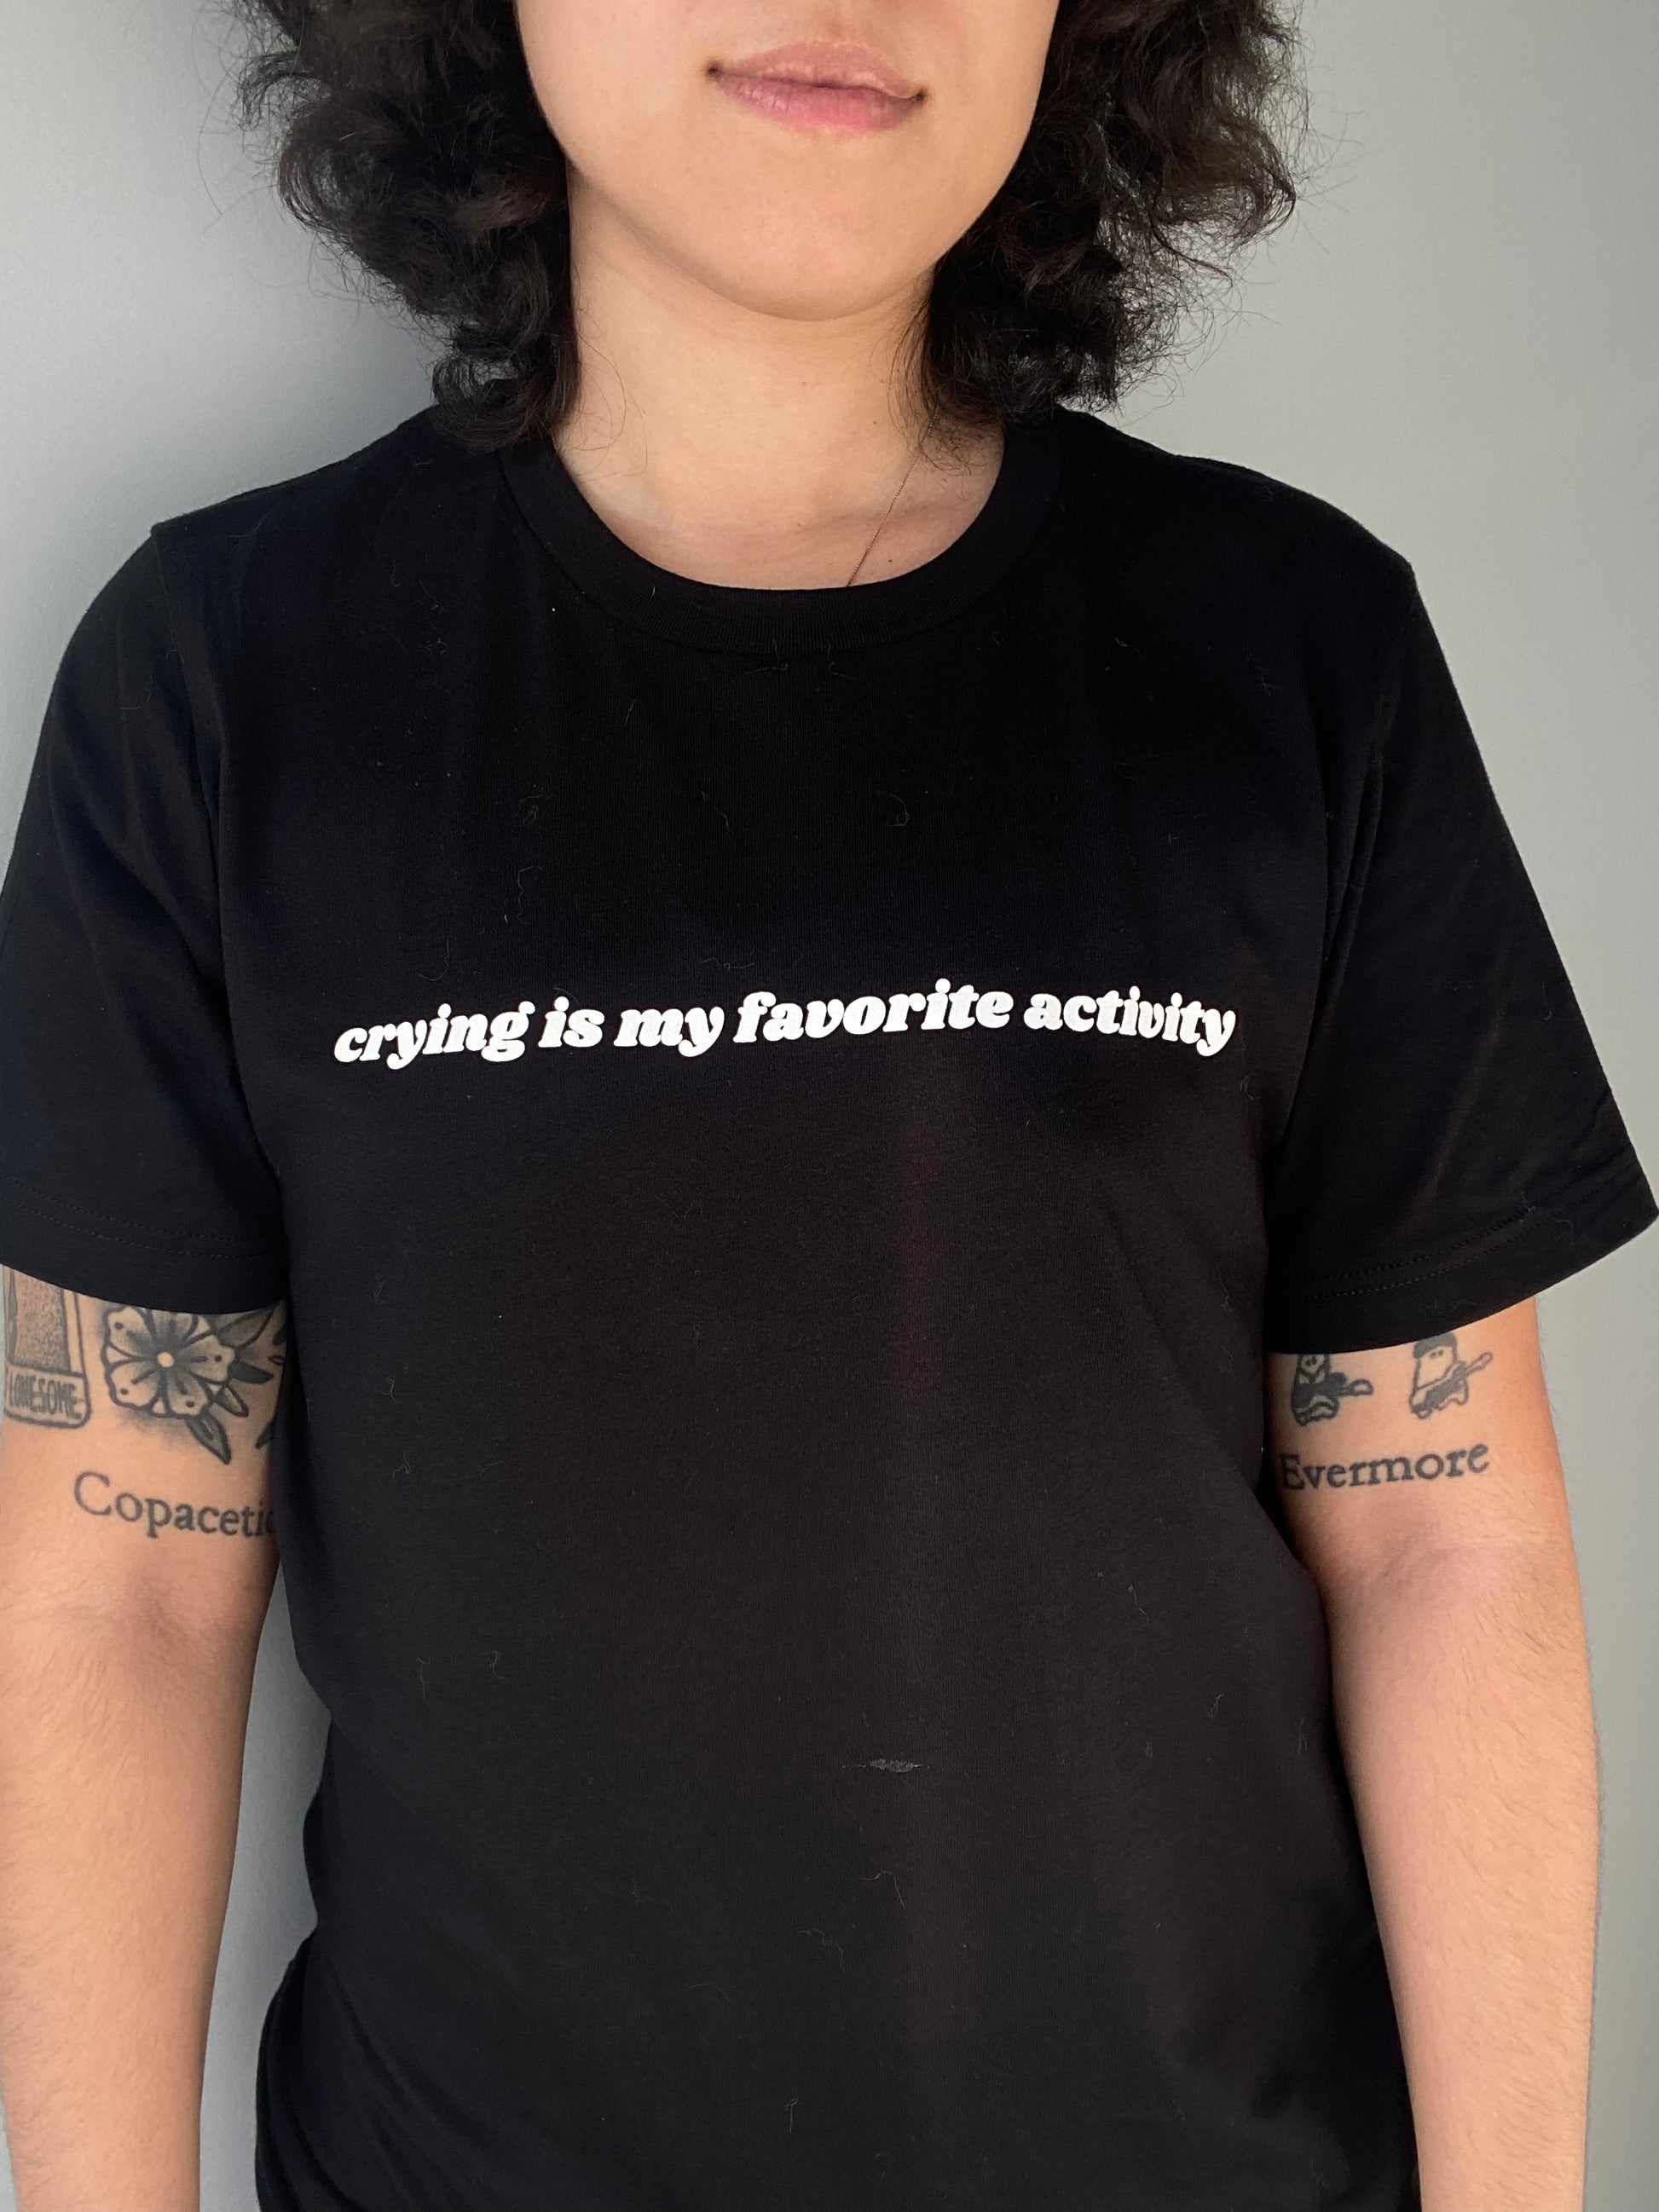 Mental health awareness shirt and uplifting apparel